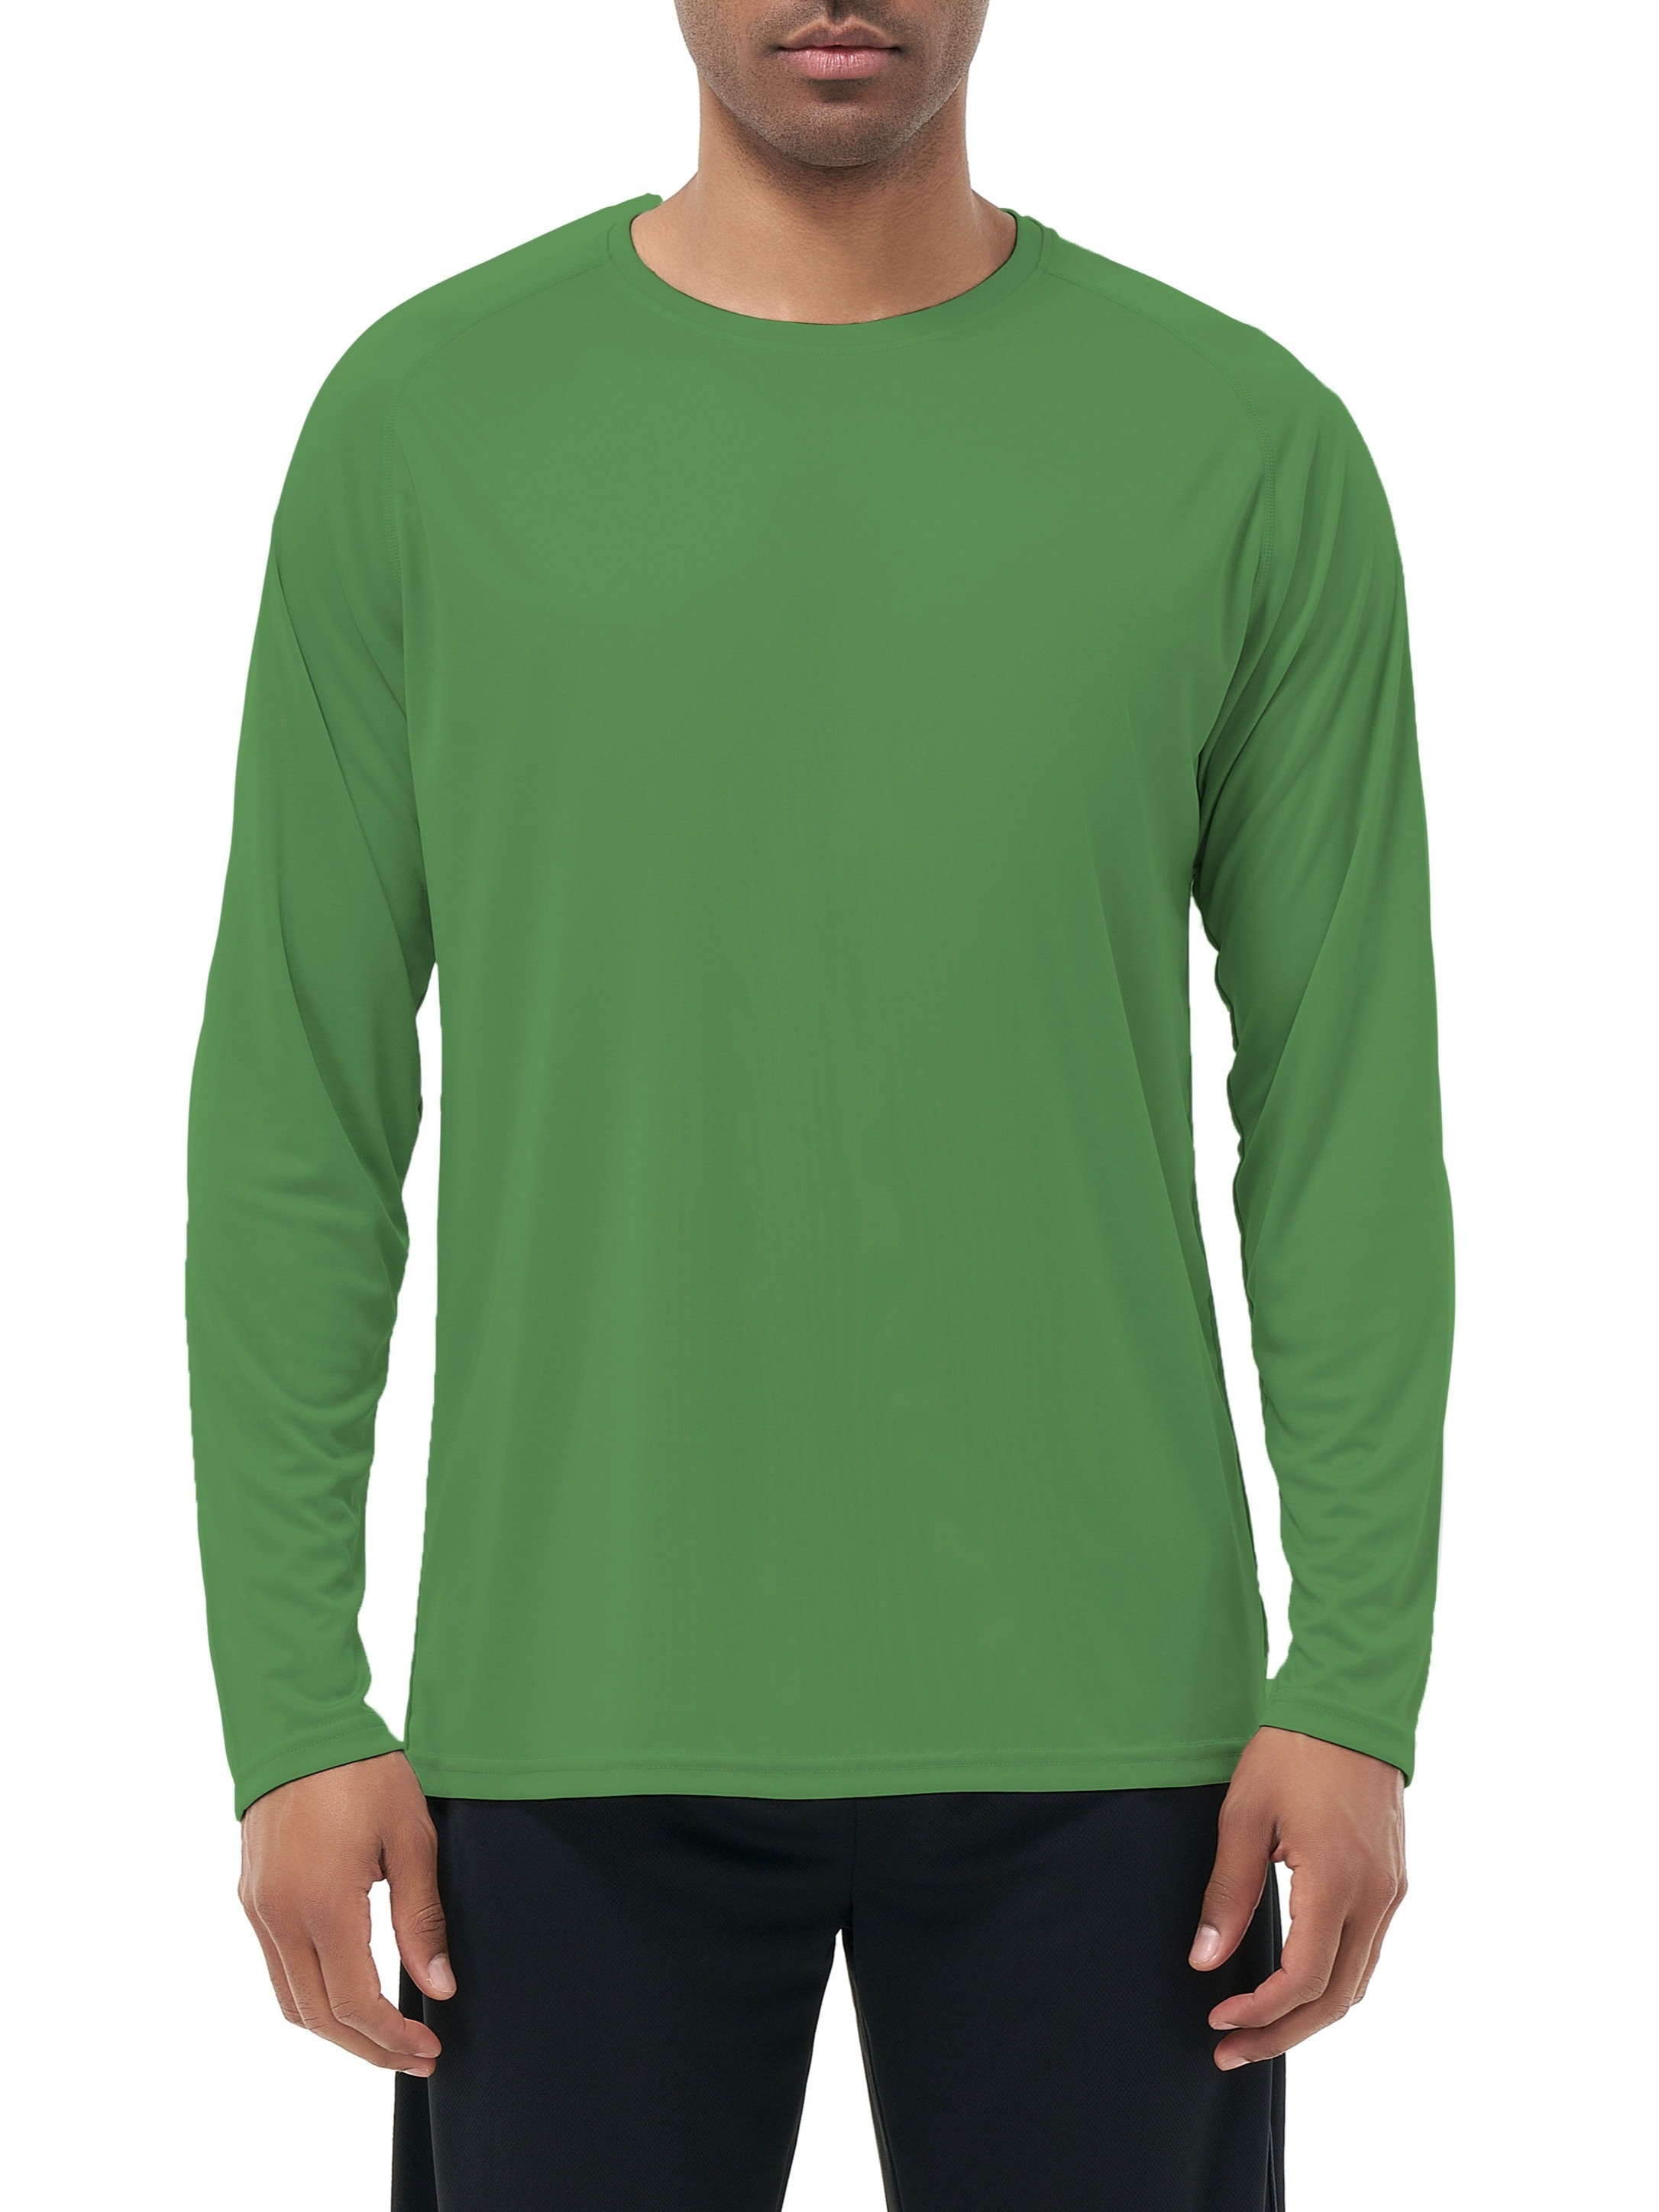 Men's Lightweight UPF 50+ Sun Protection T-Shirts Long Sleeve Shirts For  Fishing Hiking Running